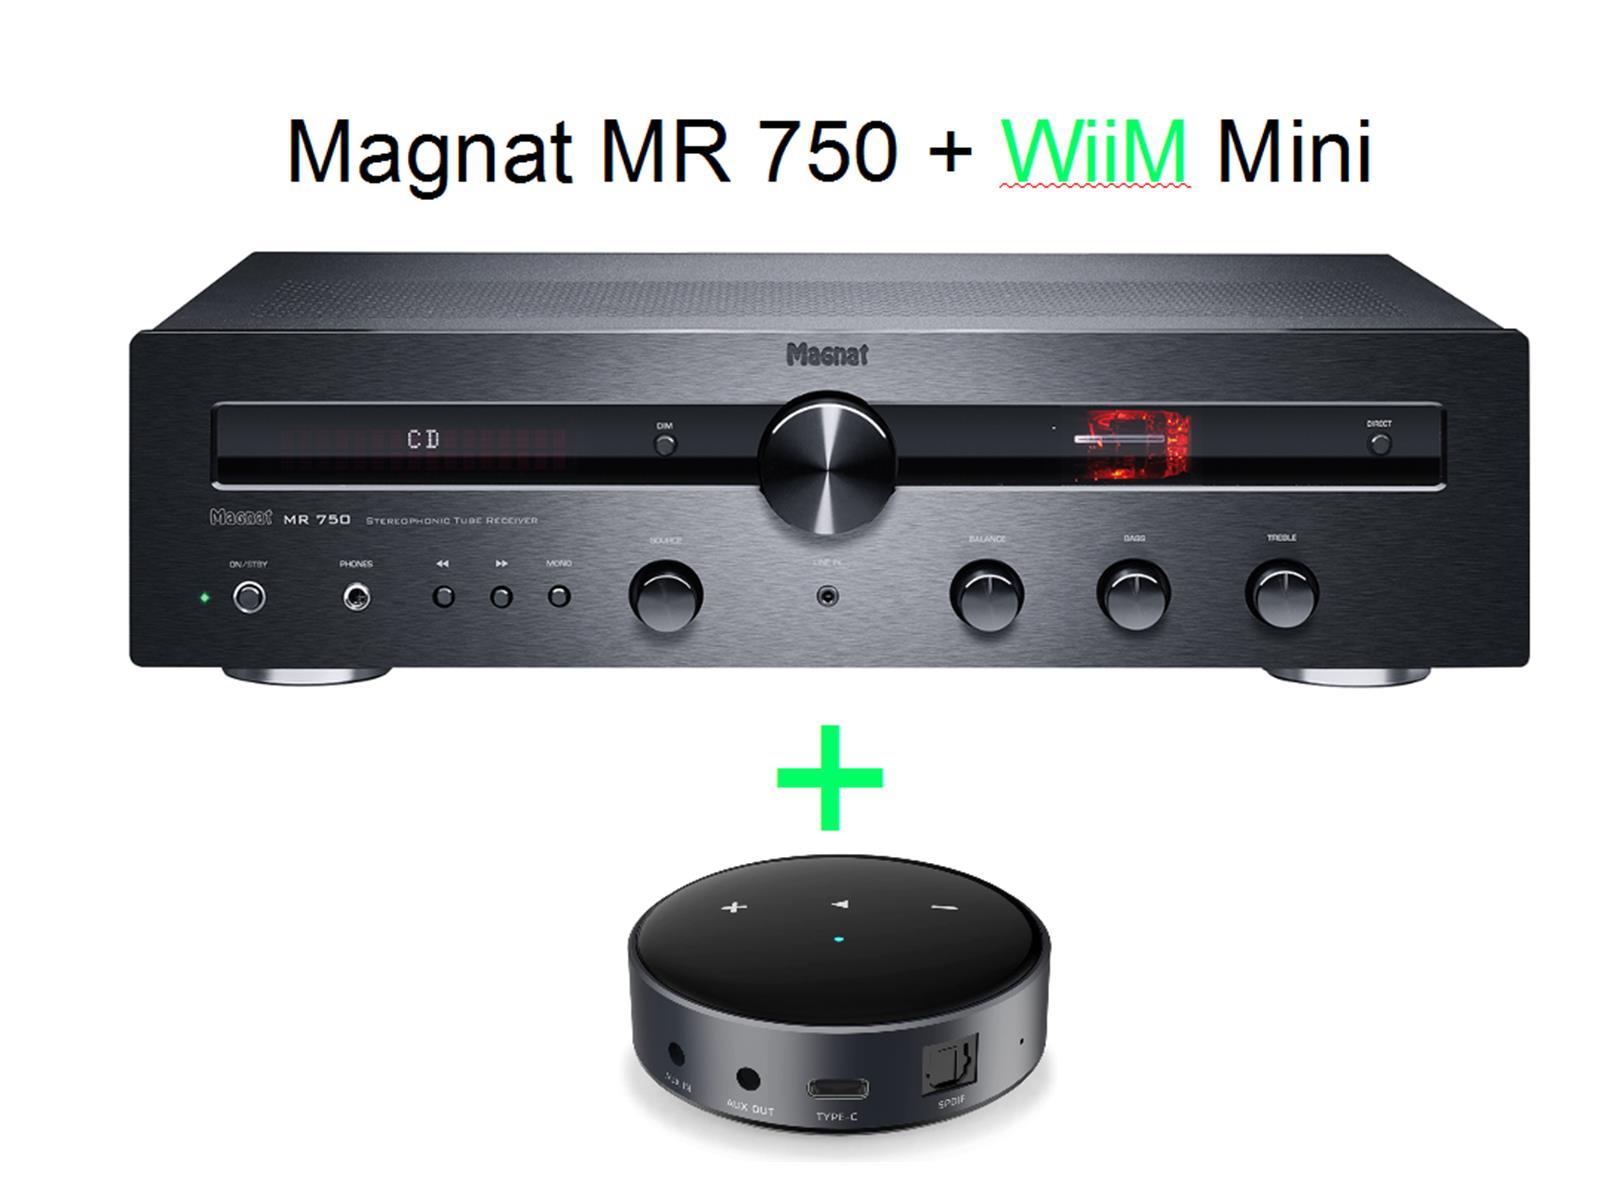 Magnat MR 750 Hybridreceiver +Wiim Mini